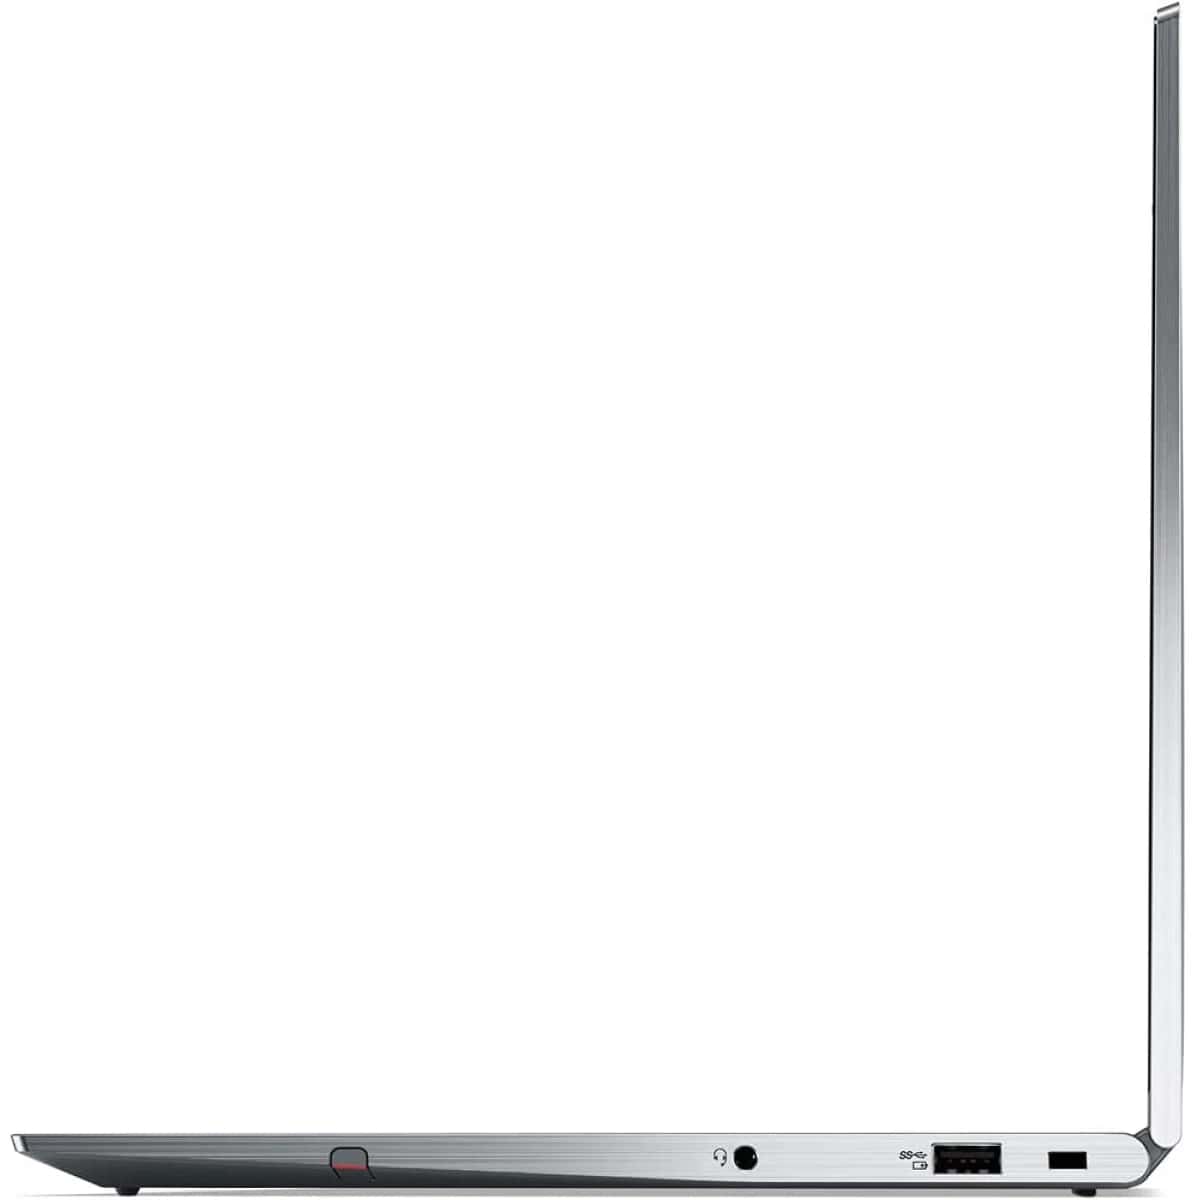 Lenovo ThinkPad X1 YOGA 11Gen Intel Core i5 up to 4.2GHZ 4-Core 8MB Cashe